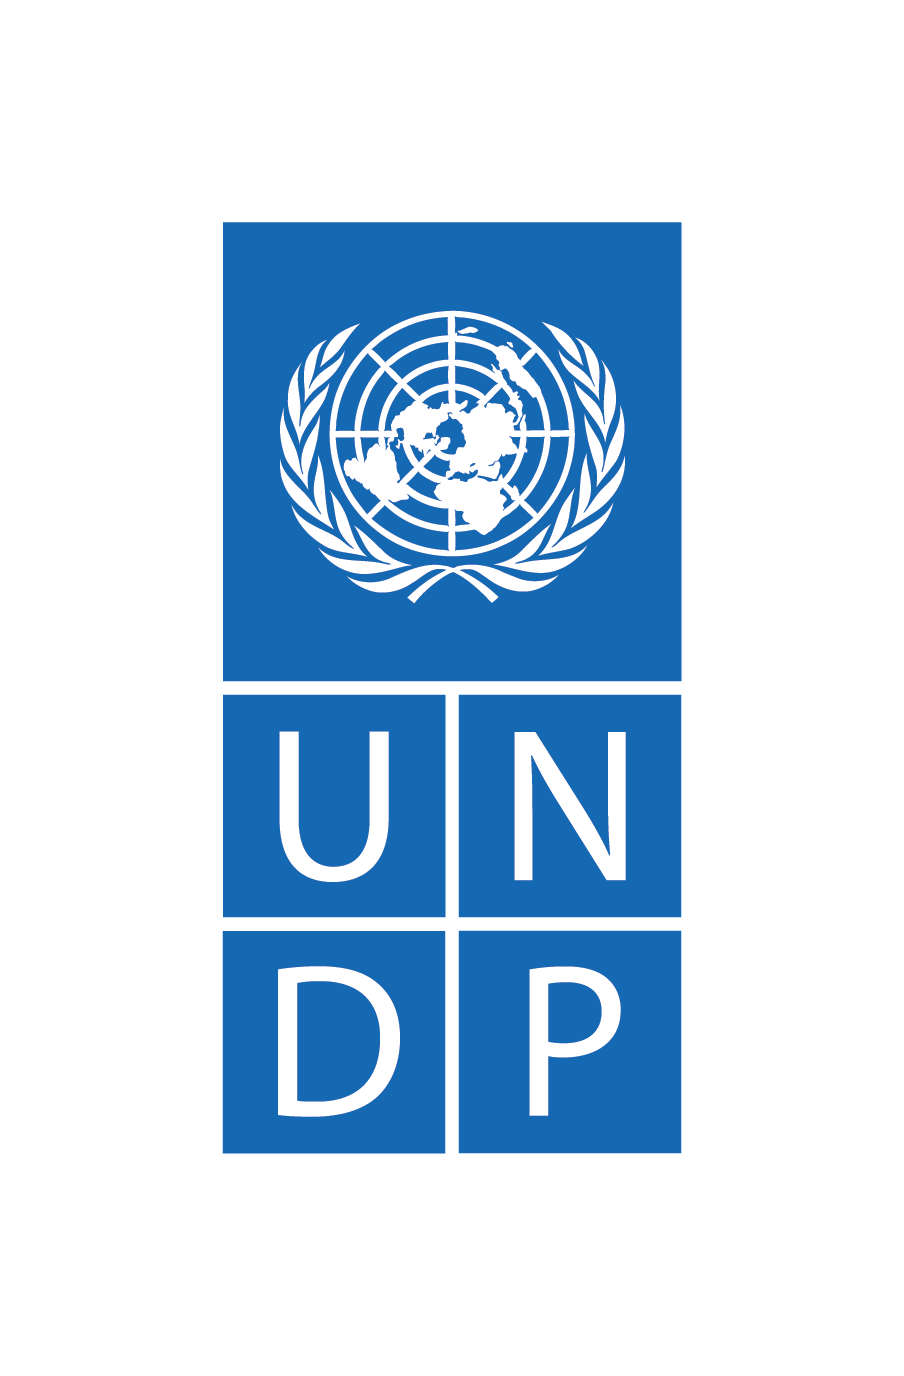 Image: logo of United Nations Development Programme (UNDP)